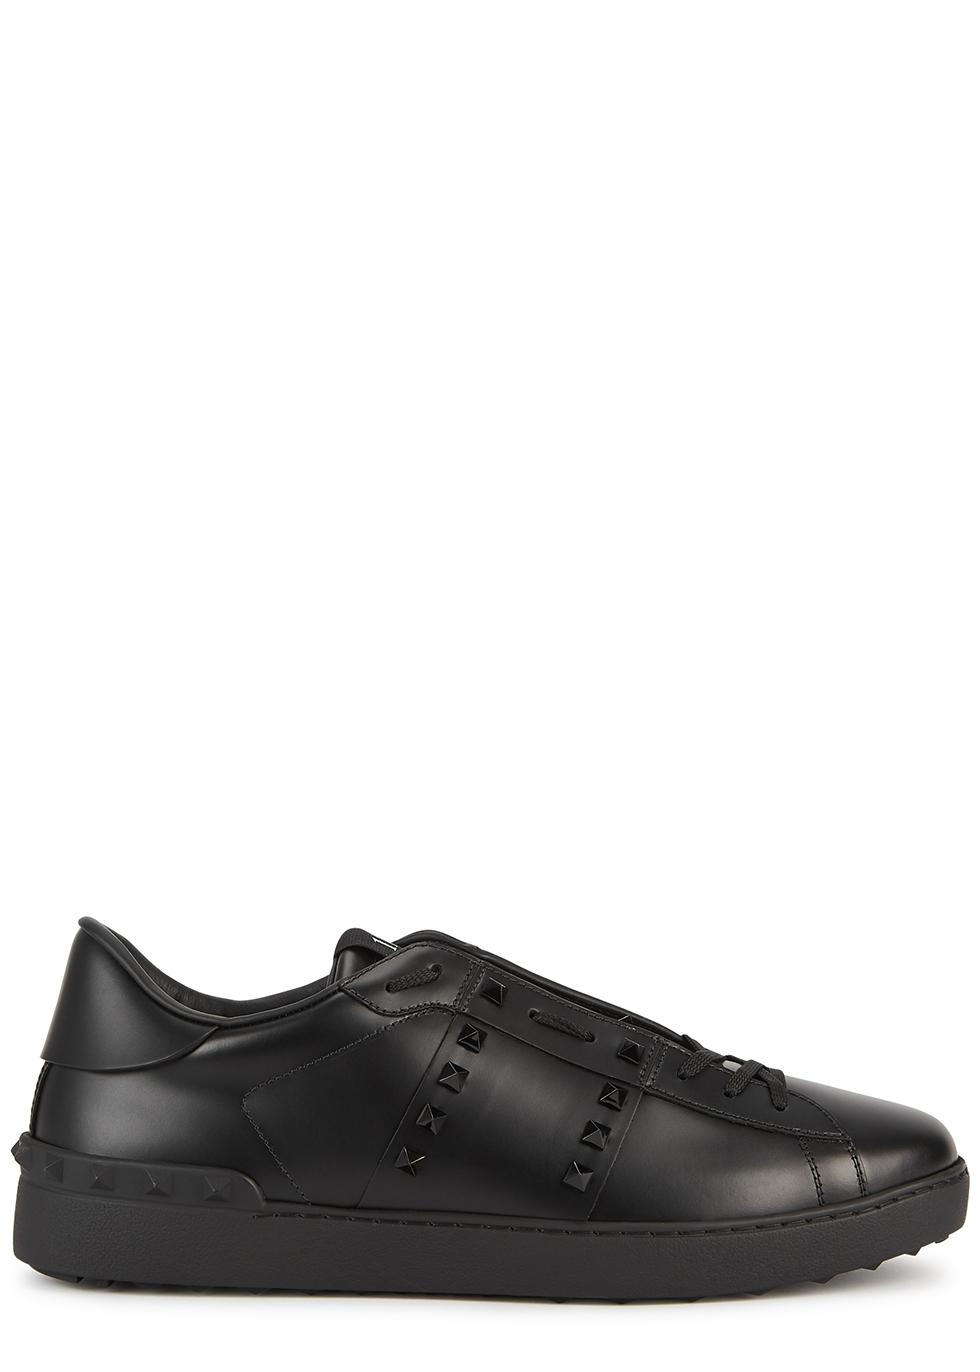 Valentino Garavani Rockstud Untitled Leather Sneakers in Black for Men ...